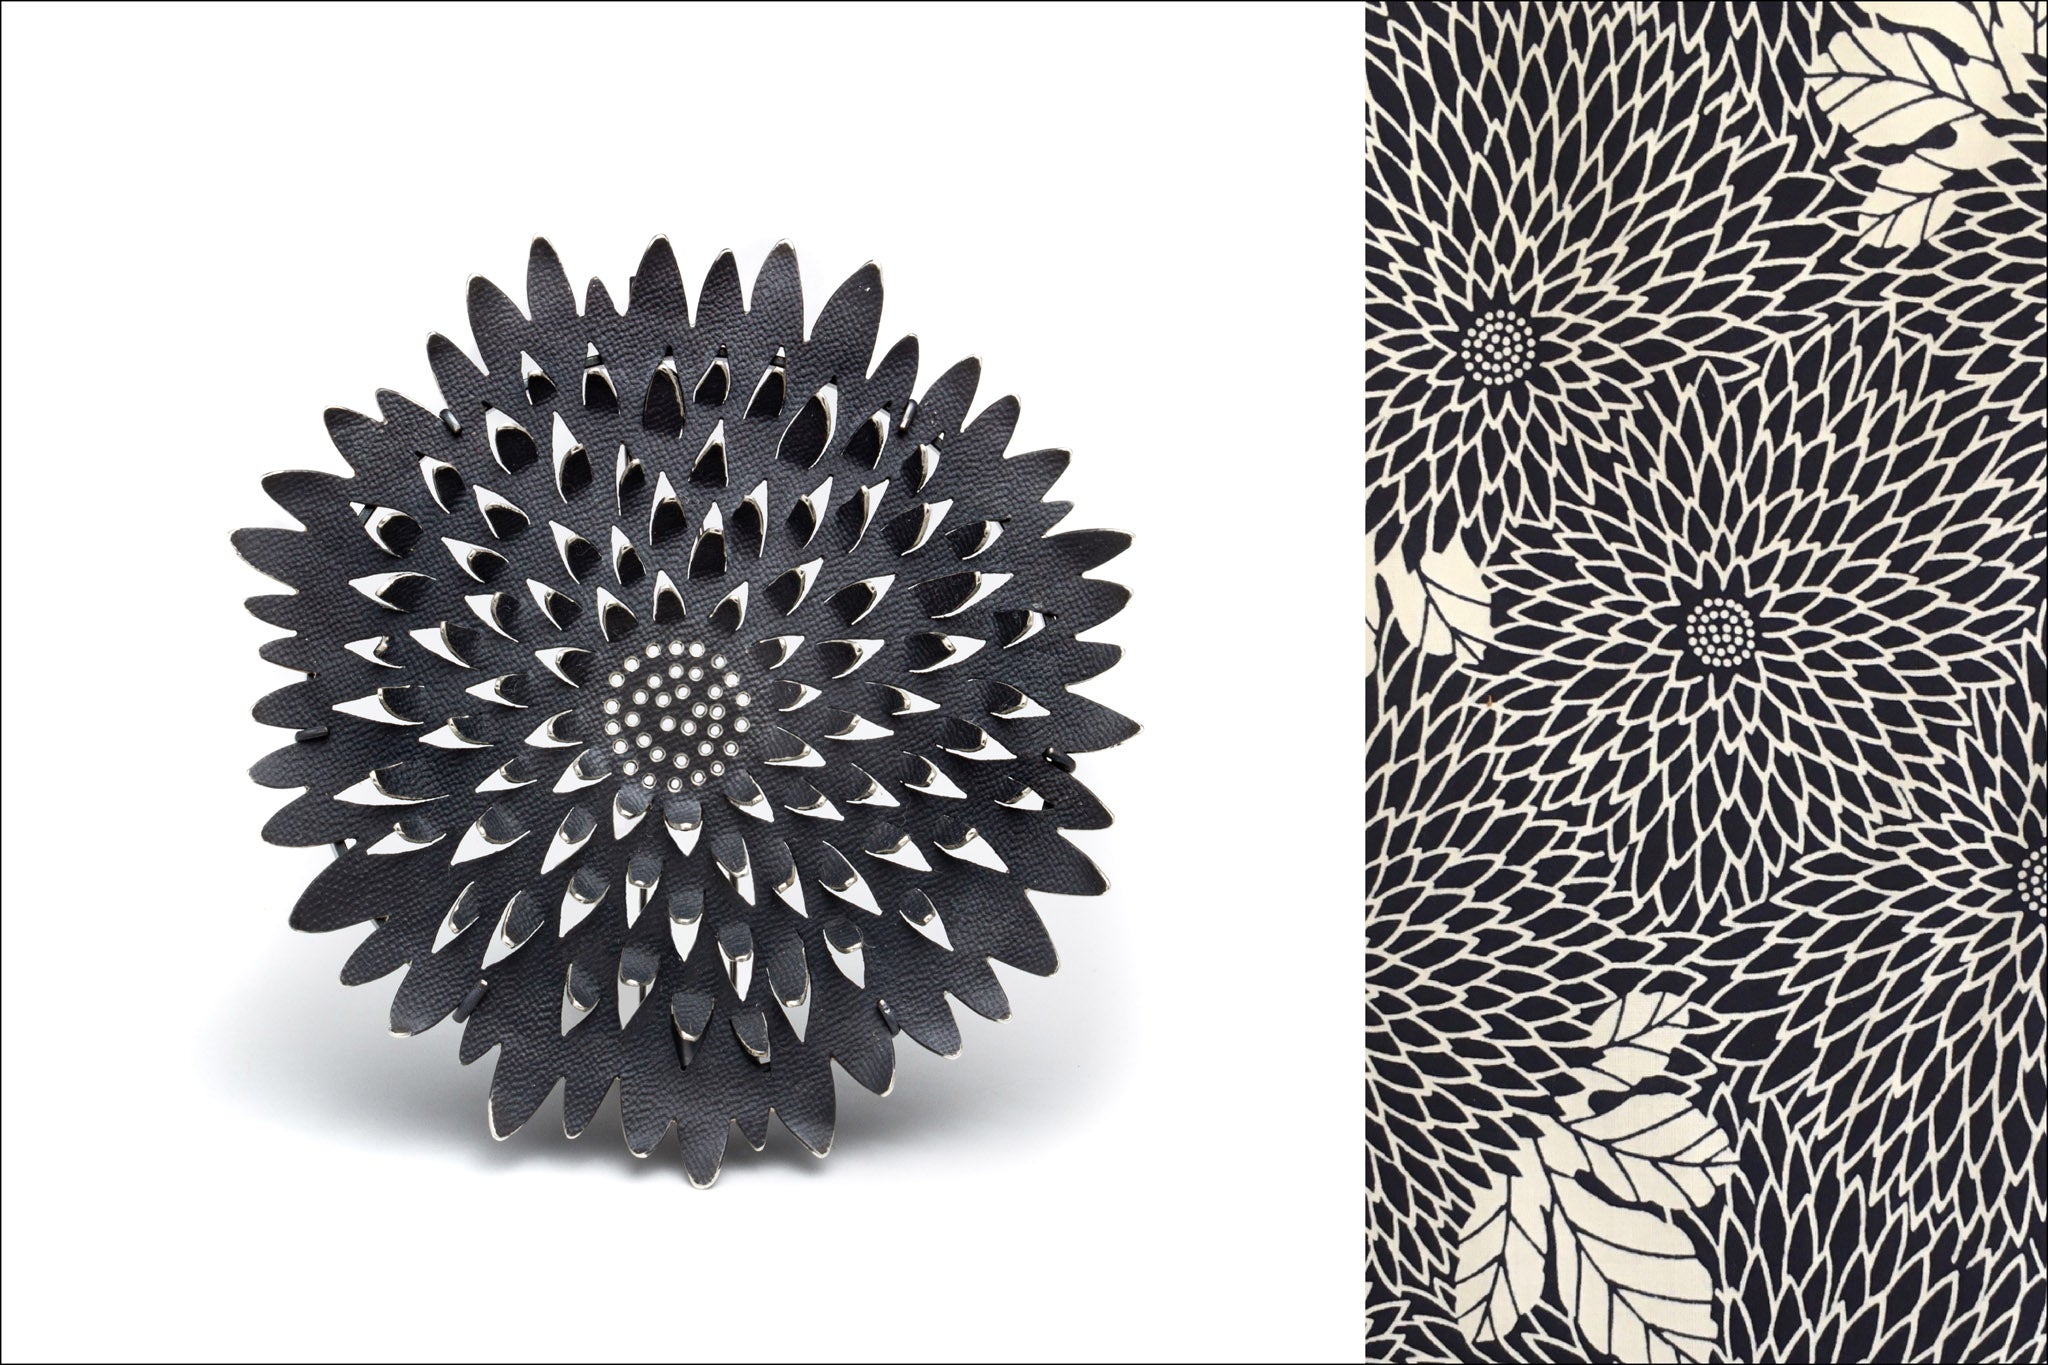 Meditation Chrysanthemum, a brooch/necklace by Dana Cassara for the Yukata Jewelry Show 2022—a creative collaboration between Okan Arts and Danaca Design